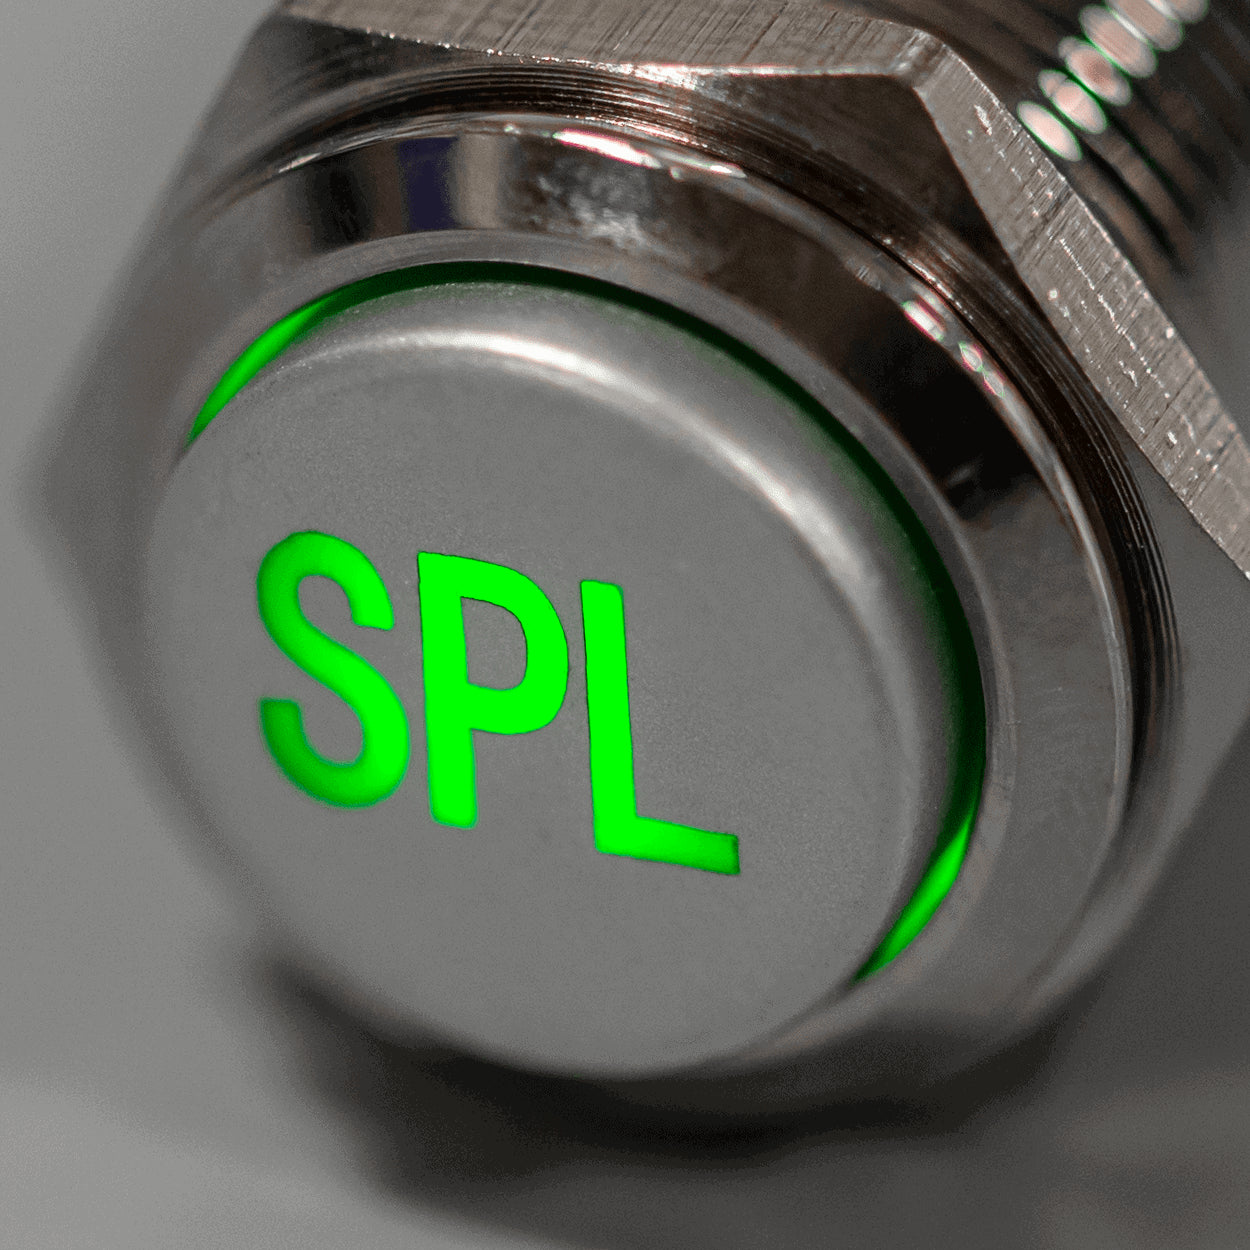 Latching Aluminum SPL Plain Font 12V Pushbutton Switch SPDT